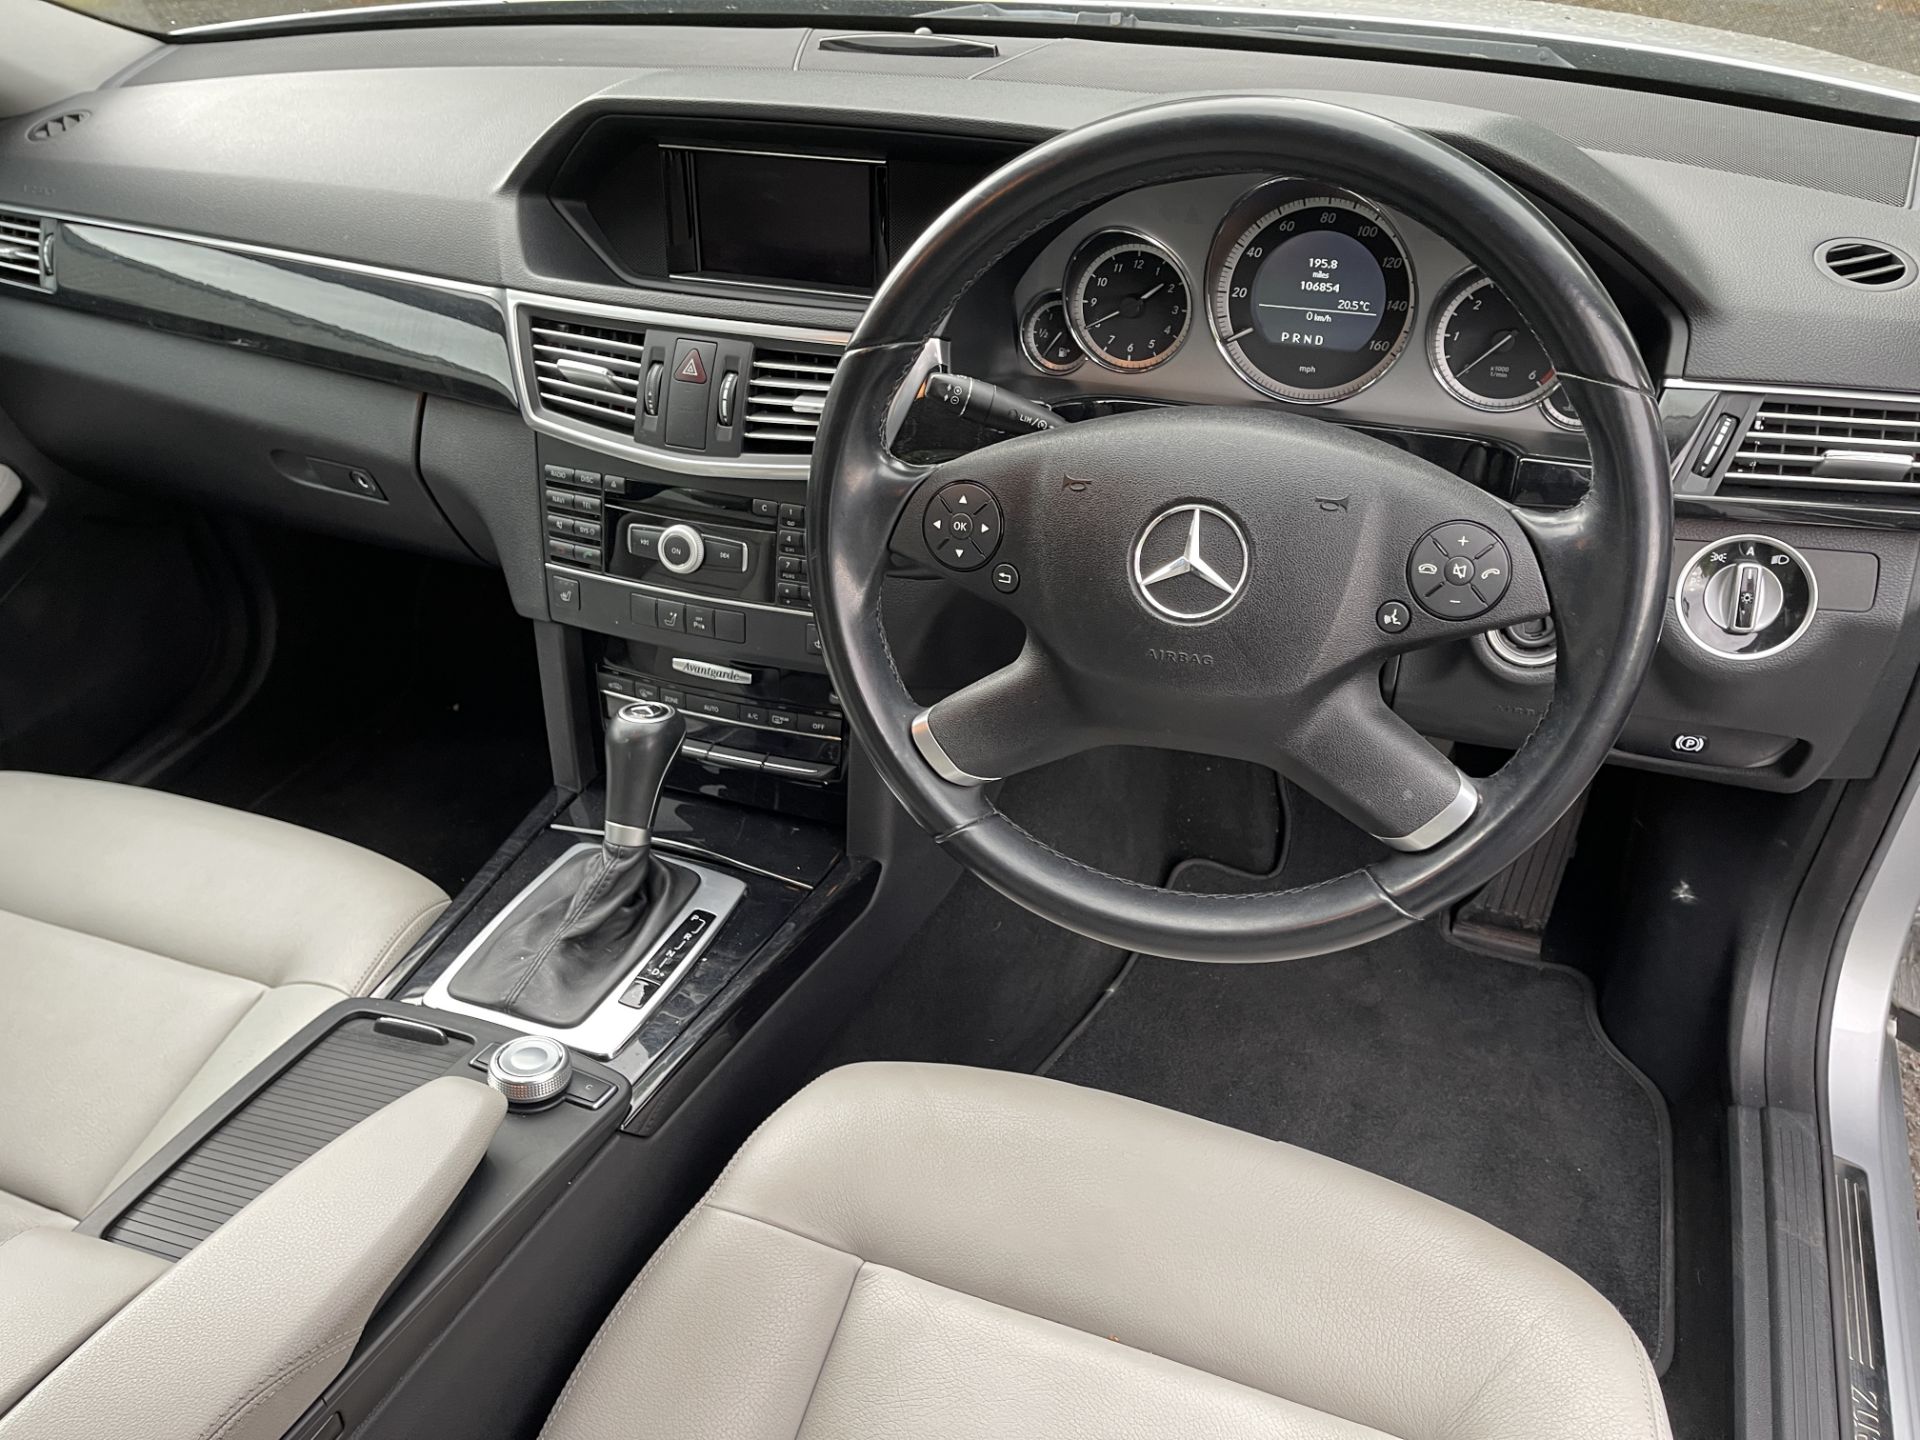 2011 - Mercedes Benz E220 CDI Avantgarde Automatic Saloon - Image 14 of 38